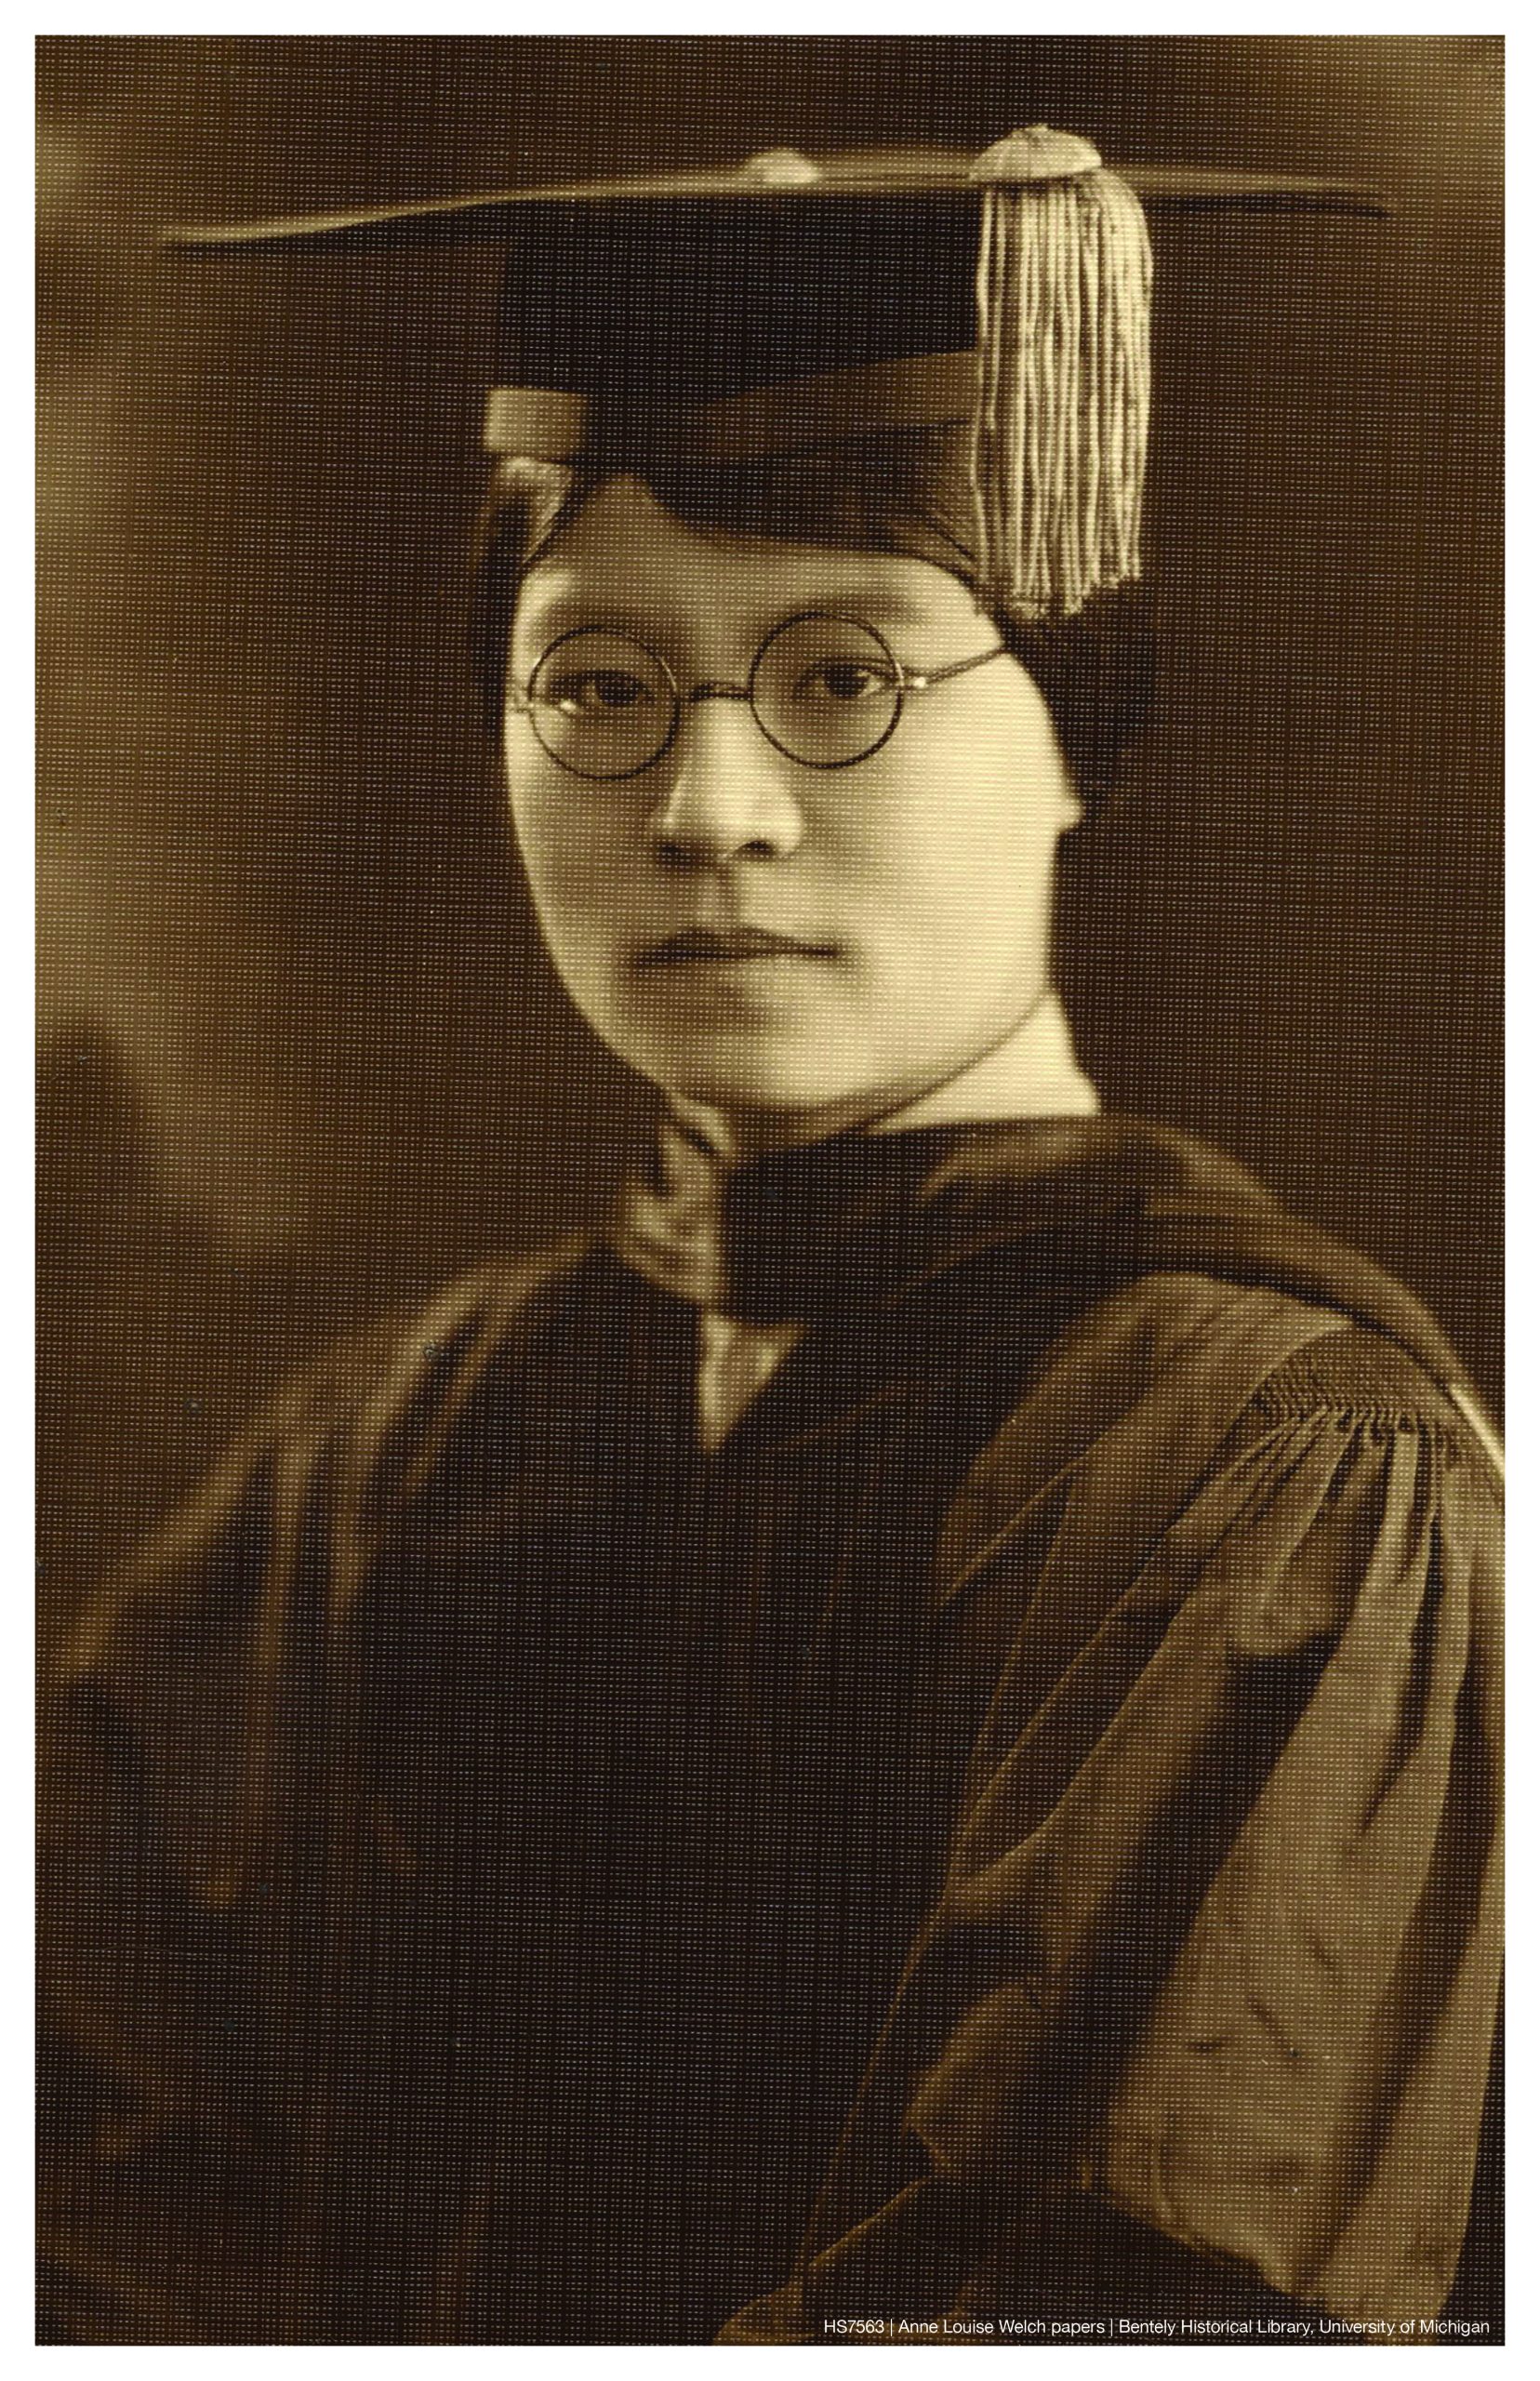 Photo of Wu Yi-Fang in cap and gown